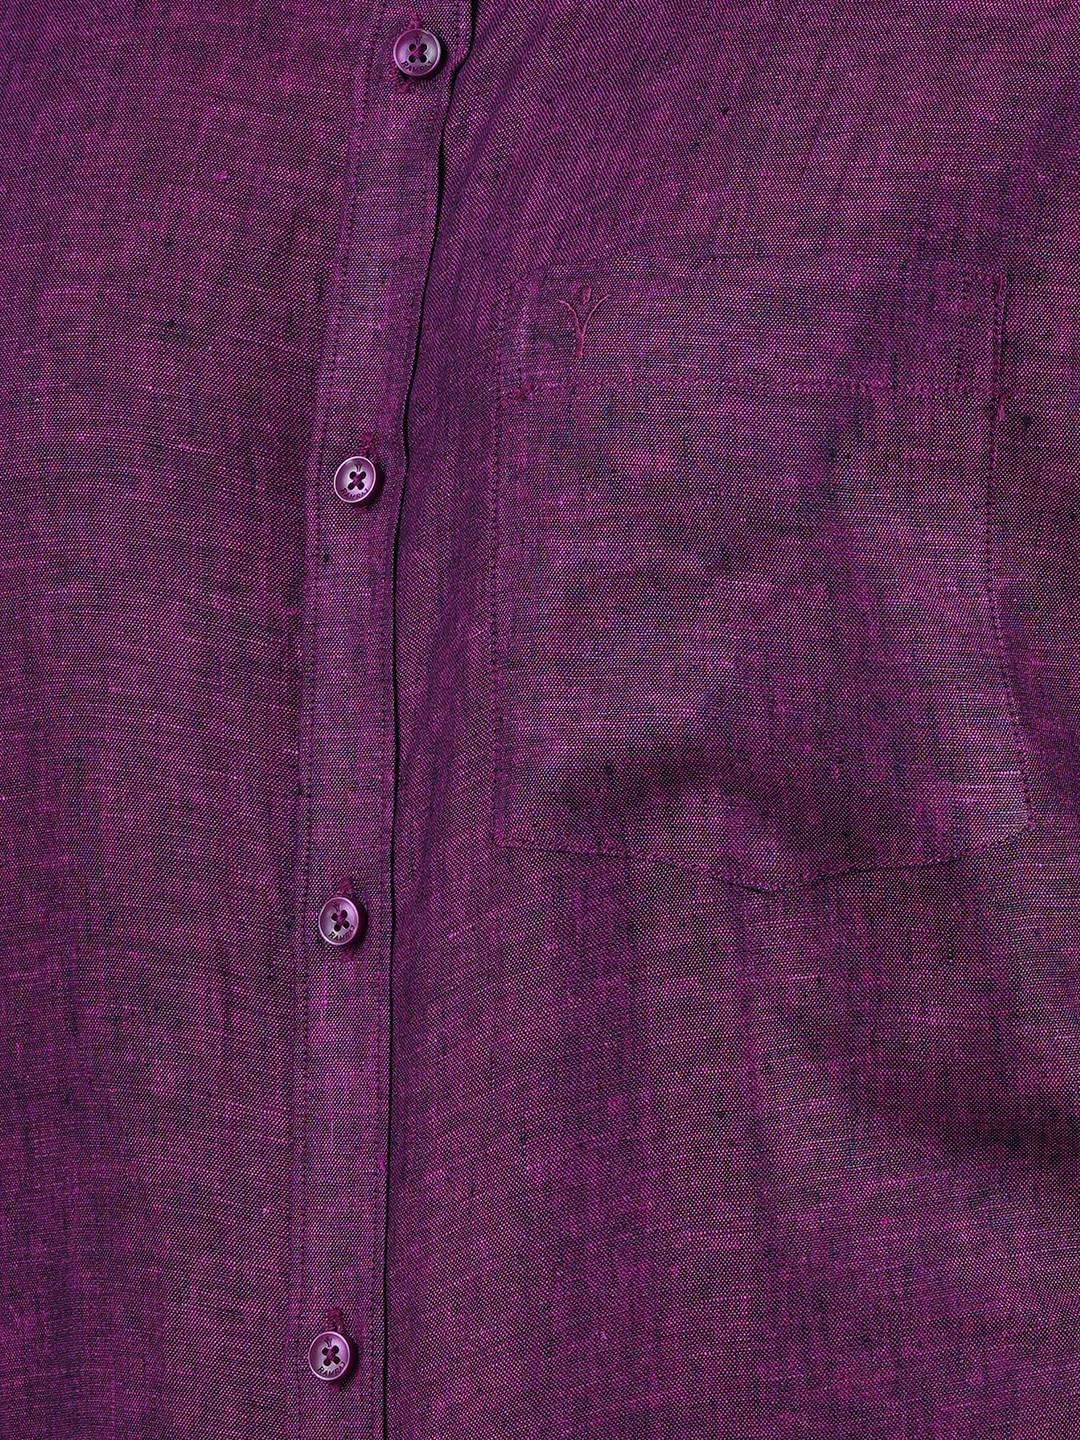 Ramraj | Ramraj Cotton 100% Pure Linen Solid Smart Fit Shirt